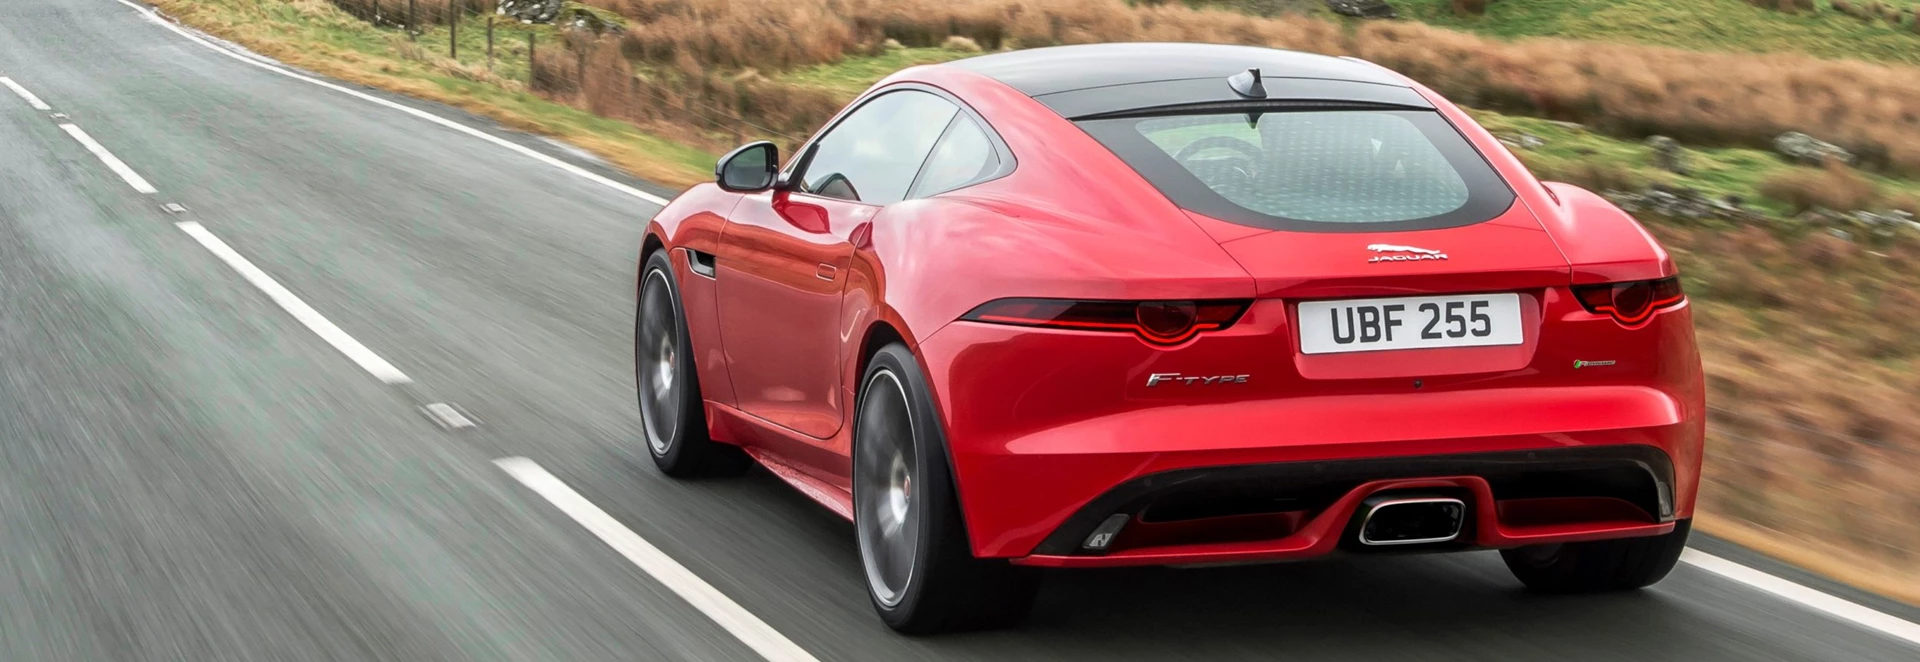 Jaguar F-TYPE adds entry-level four-cylinder engine